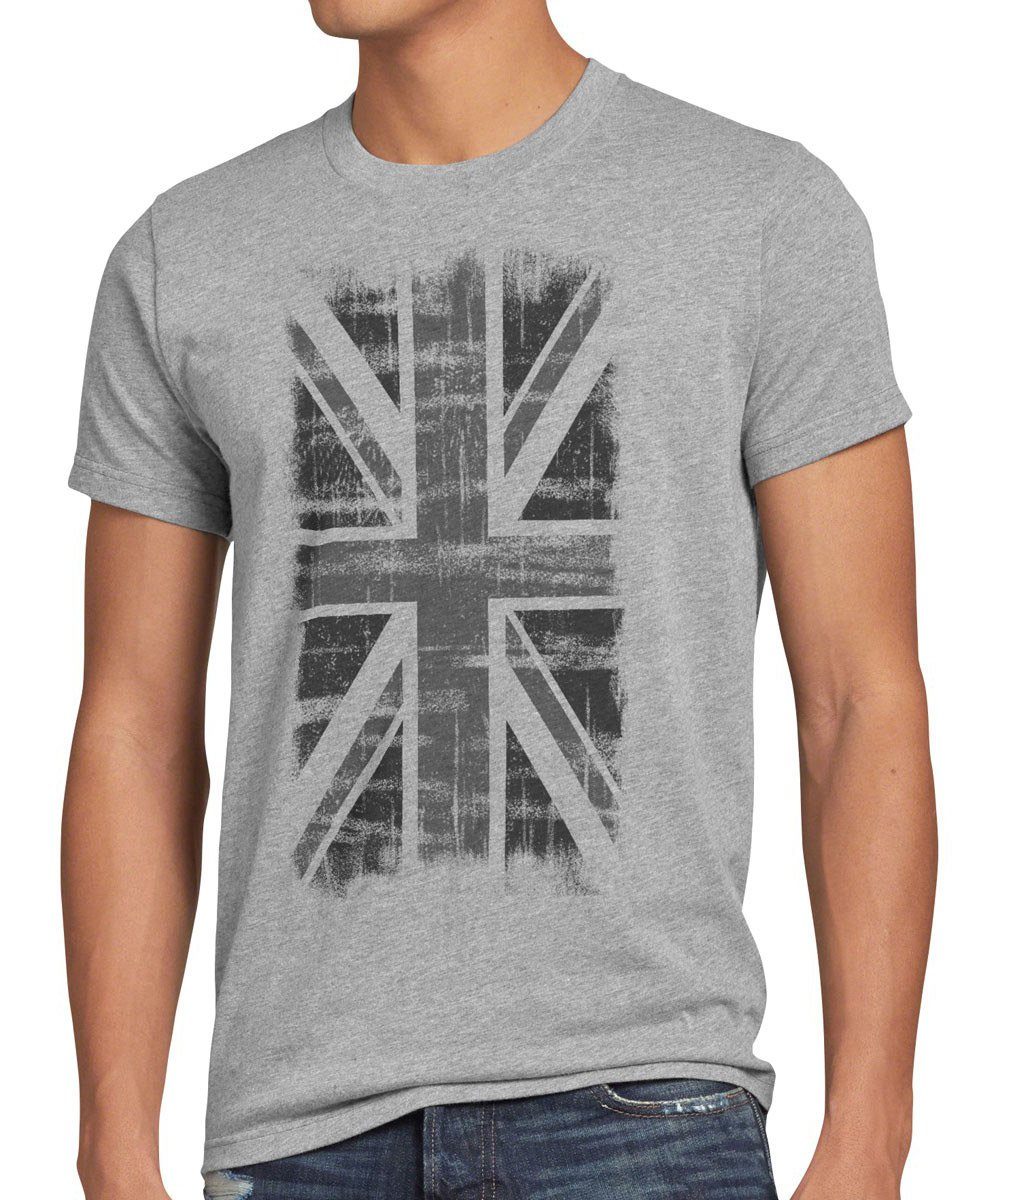 Print-Shirt Herren meliert London T-Shirt UK Kingdom style3 Britain flag United Flagge Union Jack England grau